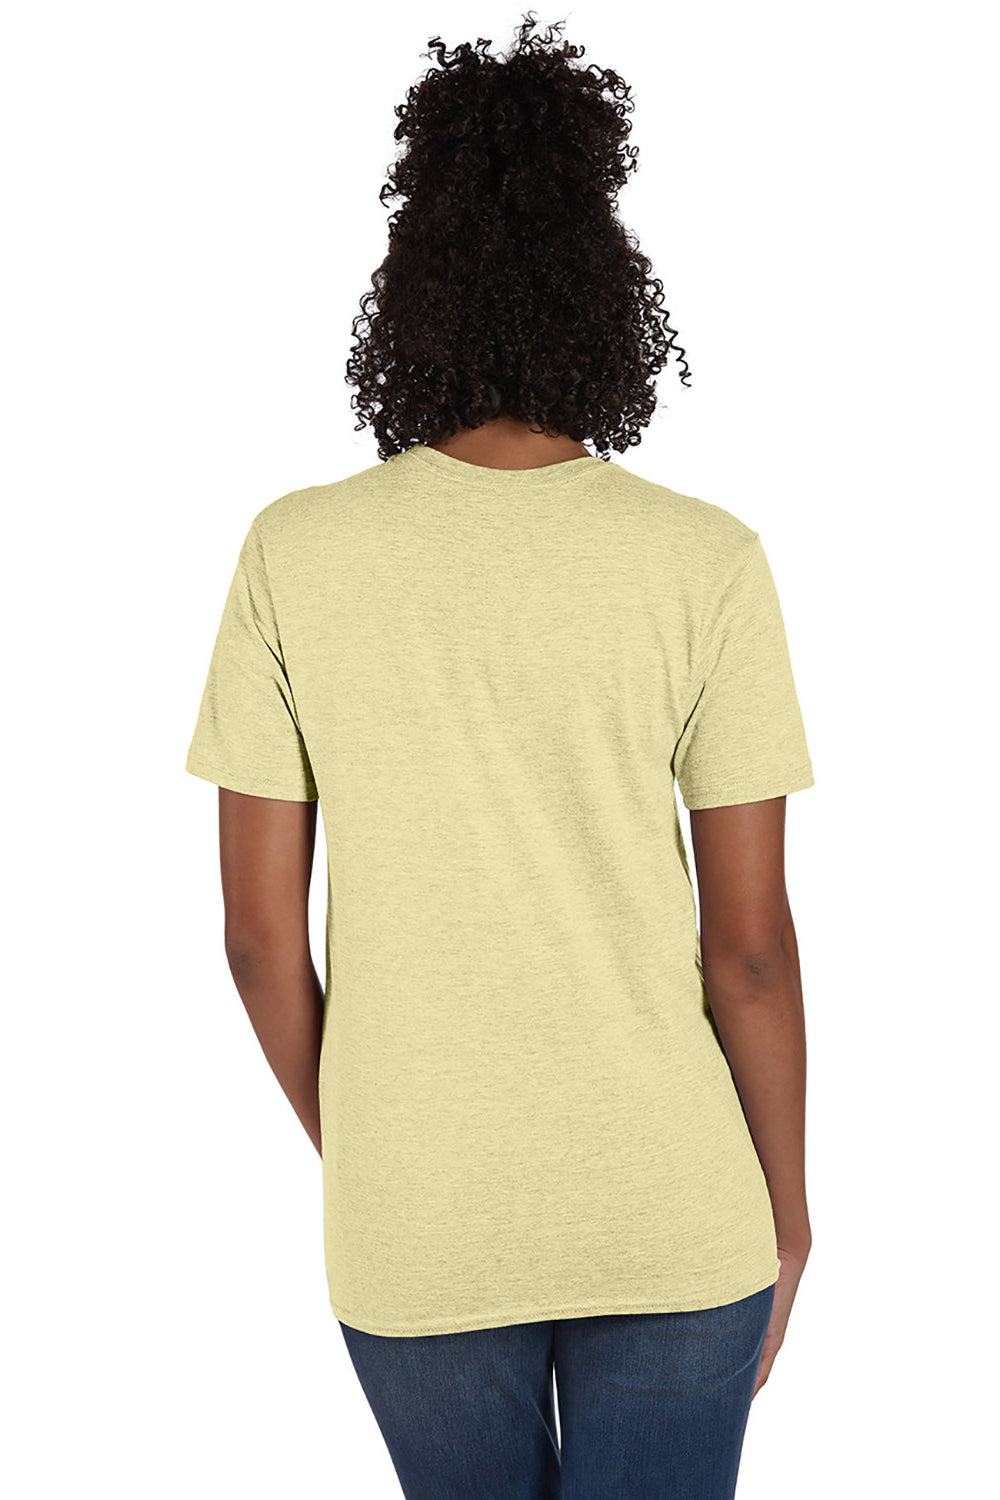 Hanes 4980 Mens Nano-T Short Sleeve Crewneck T-Shirt Heather Lemon Meringue Yellow Back